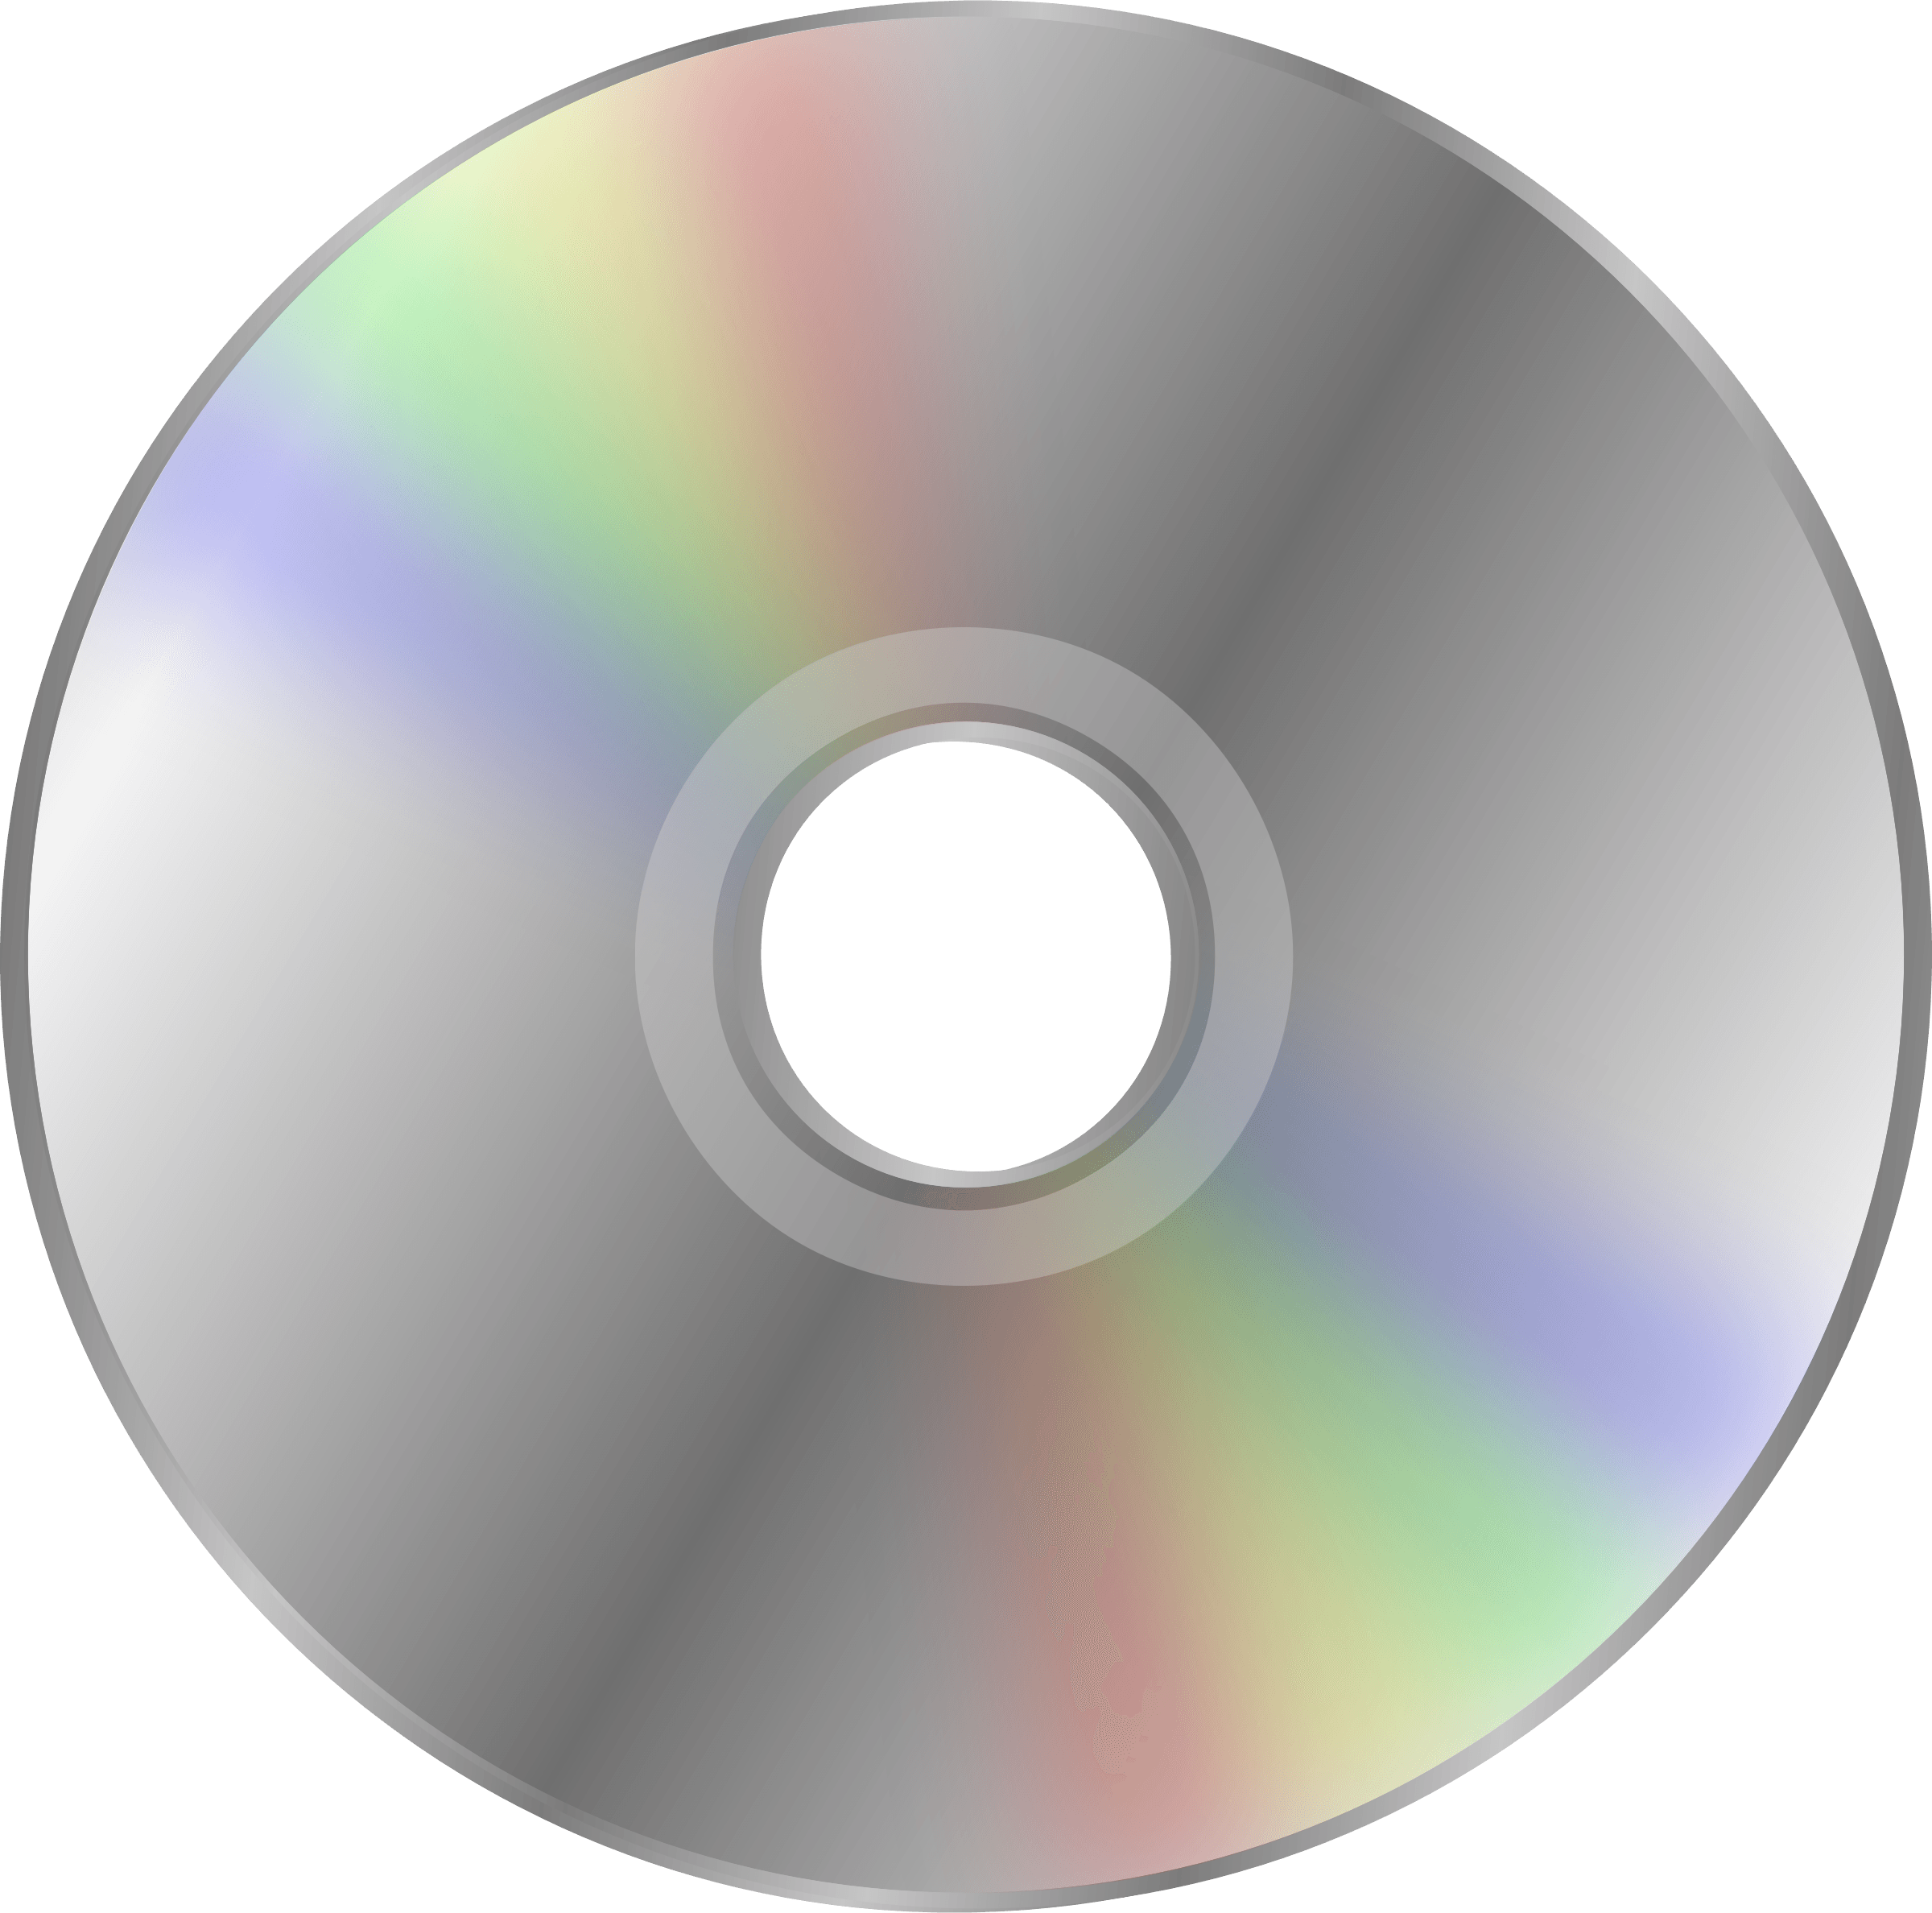 Gambar Transparan disk kompak